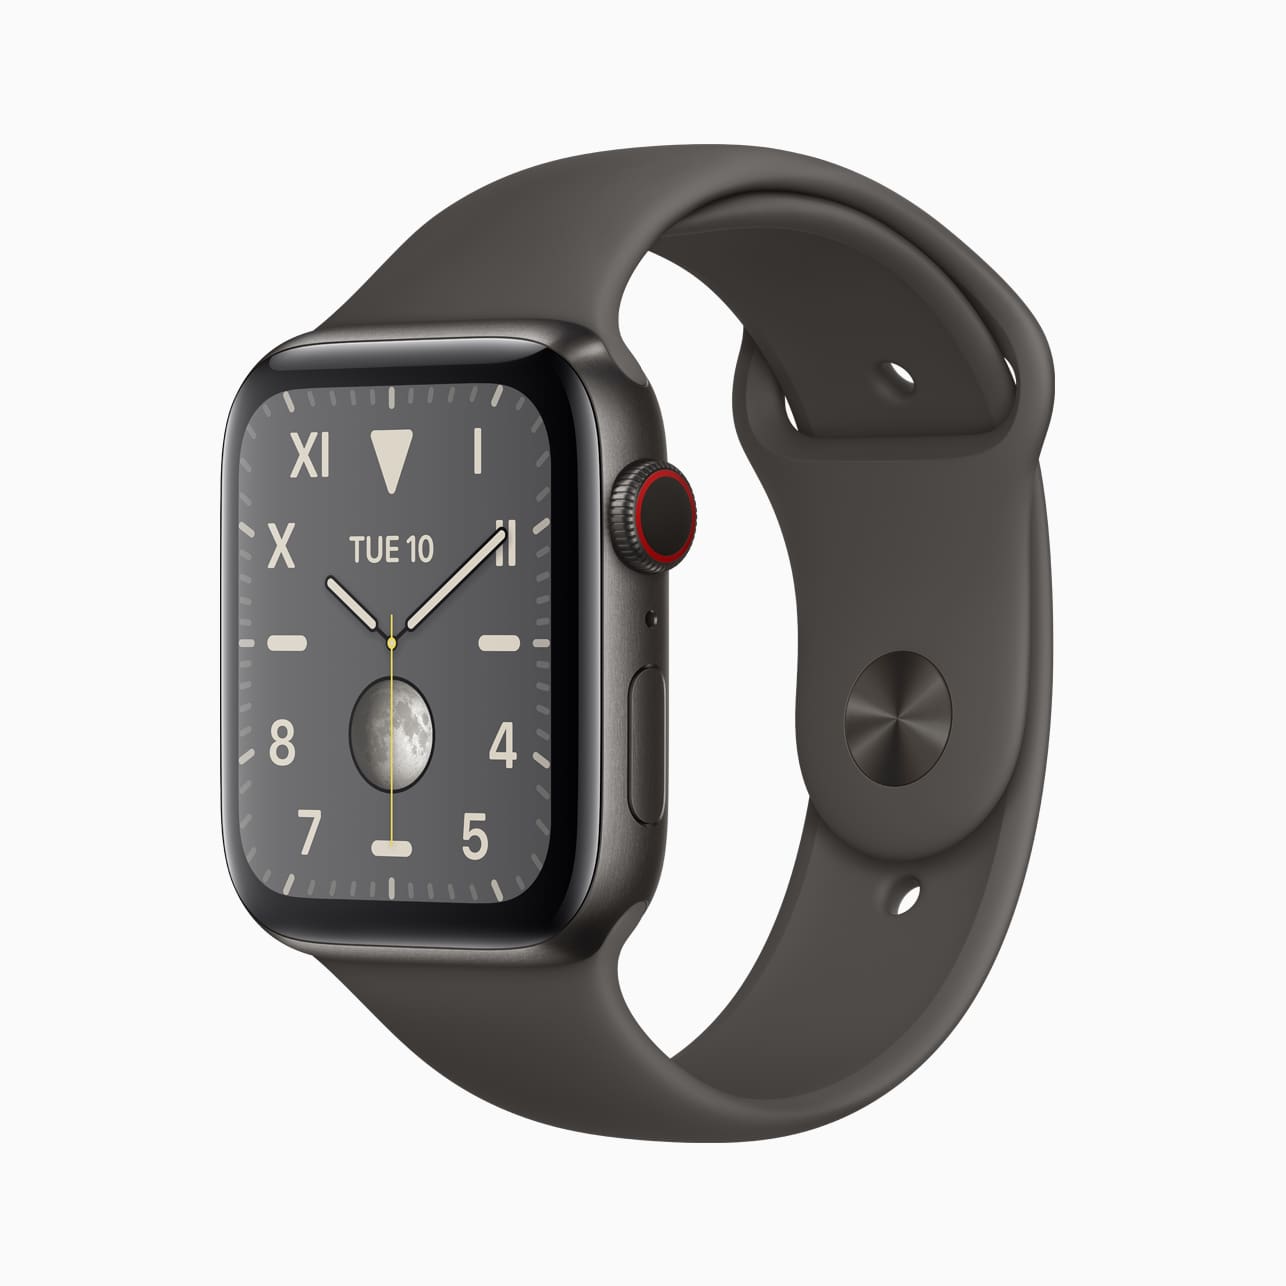 The Apple Watch Series 5 – three upgrades that matter